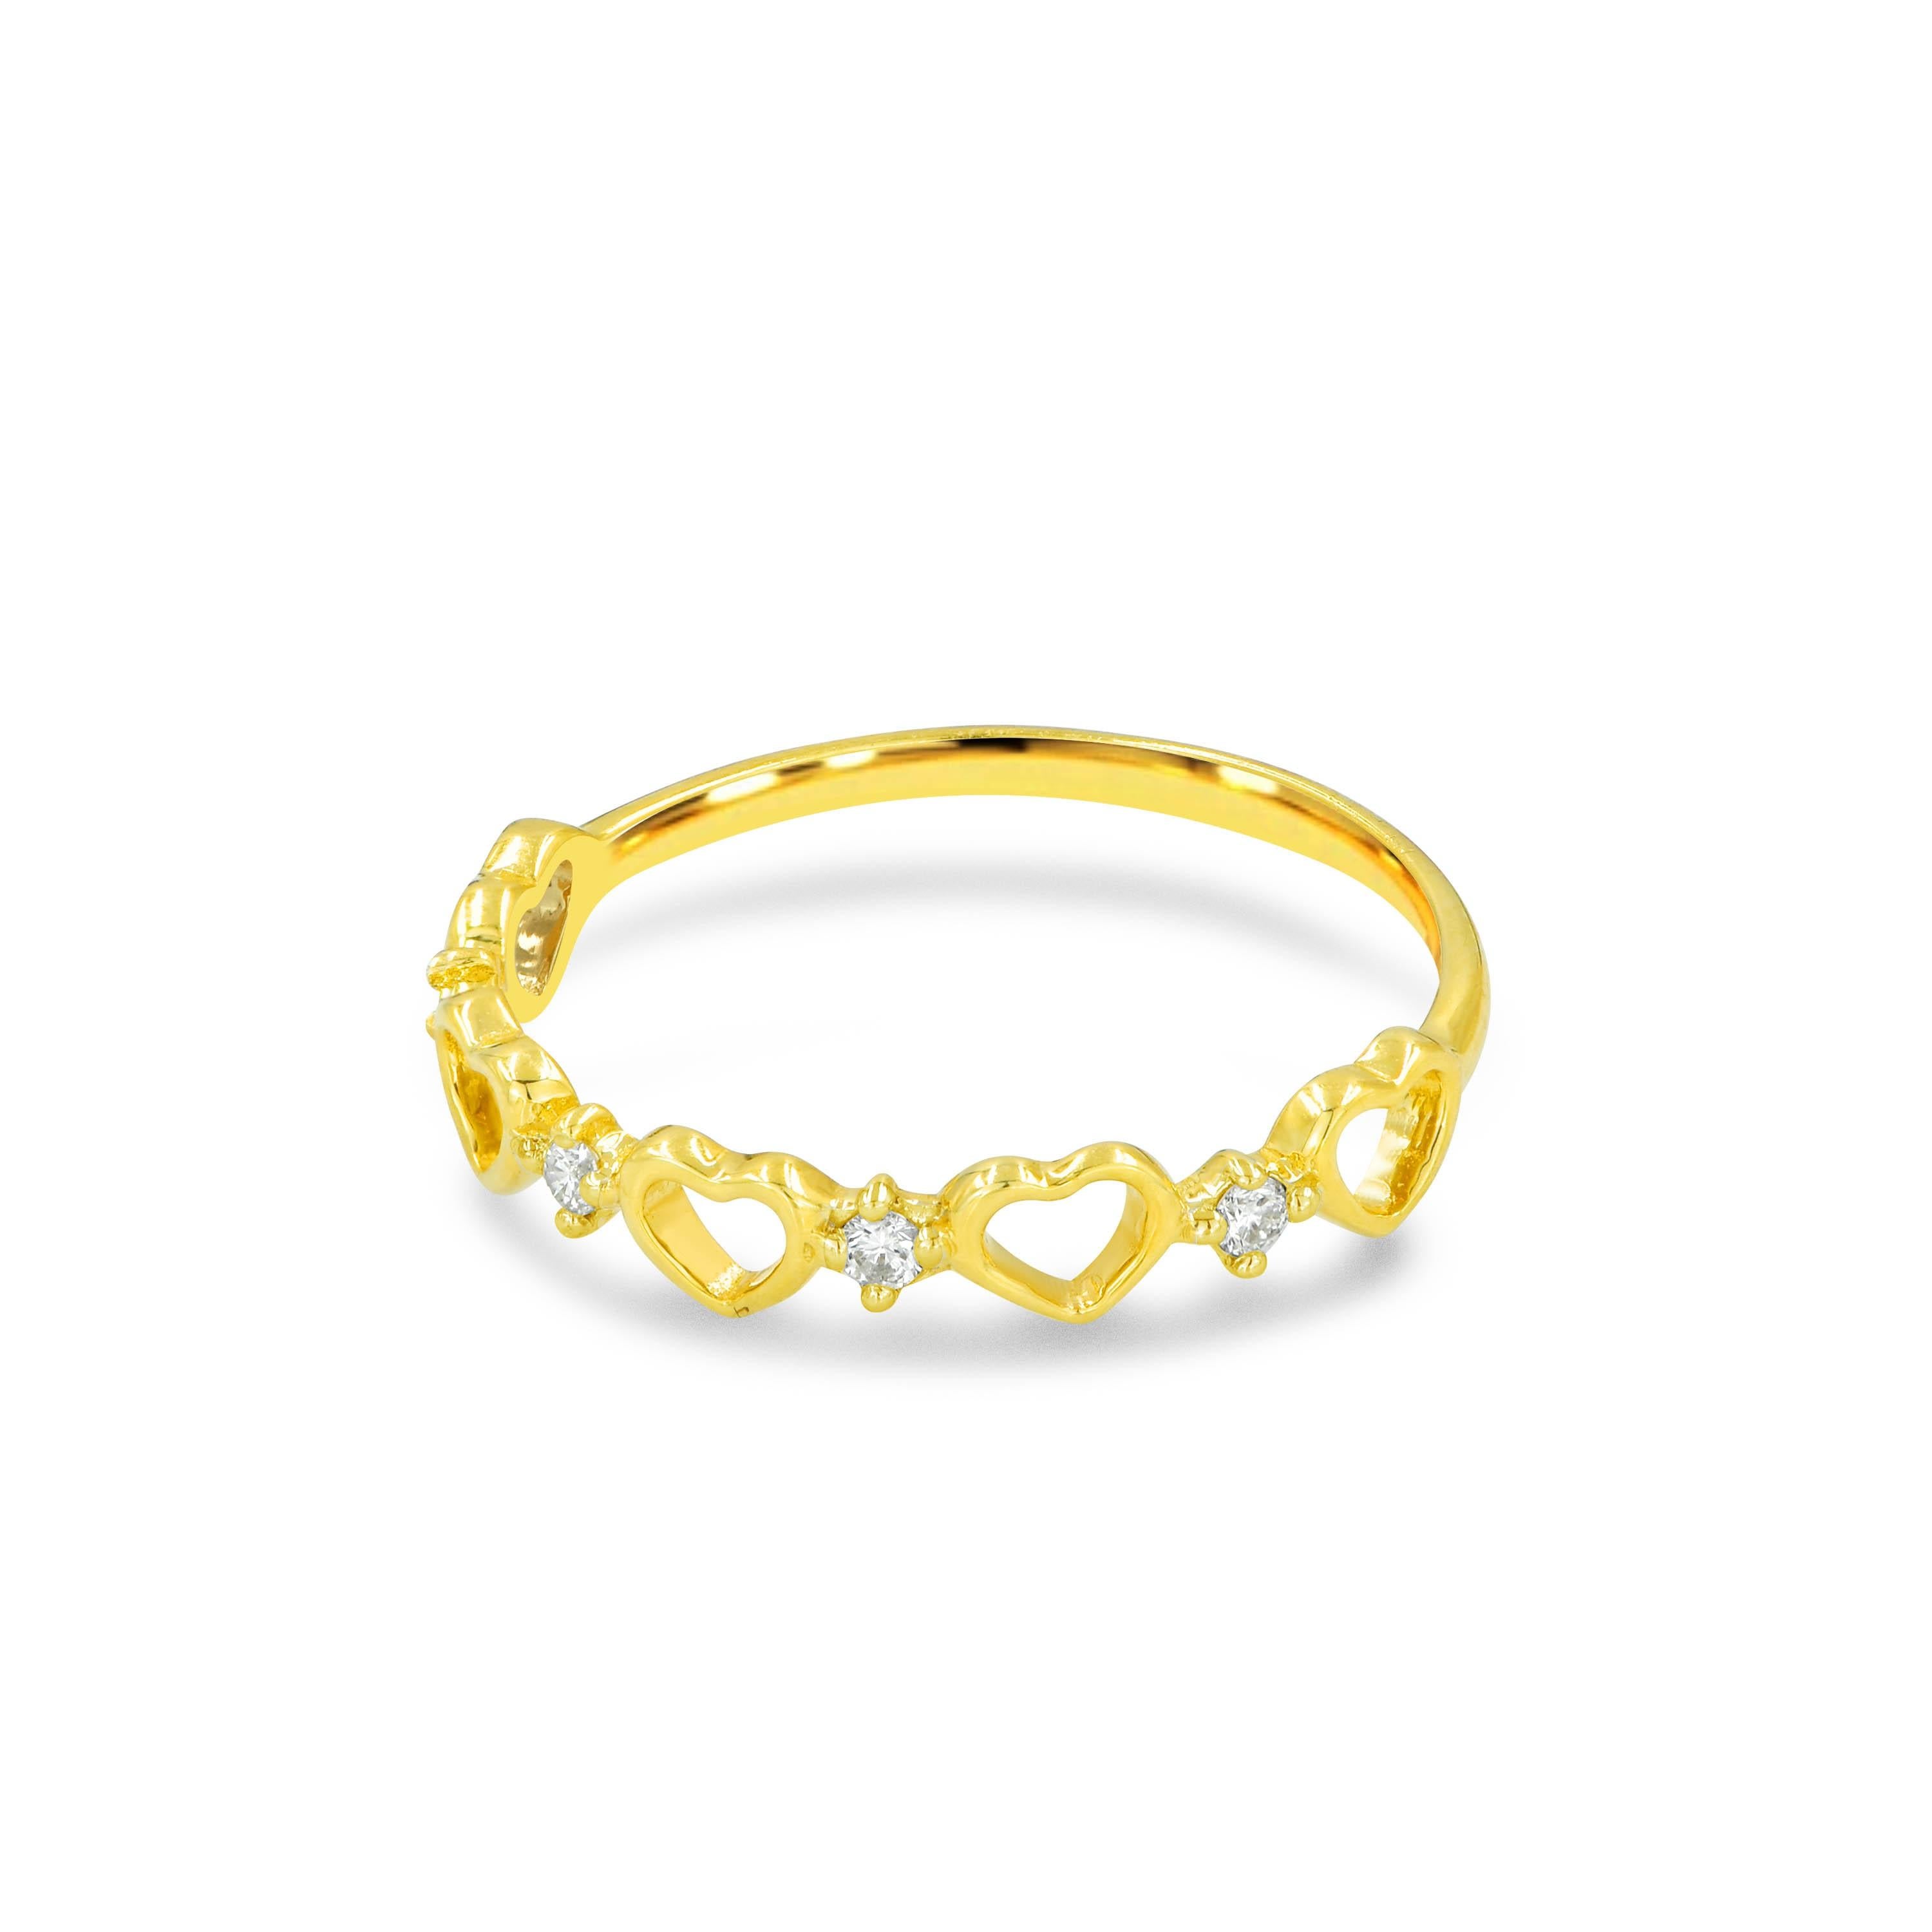 For Sale:  18k Gold 0.07 Carat Diamond Heart Ring 5